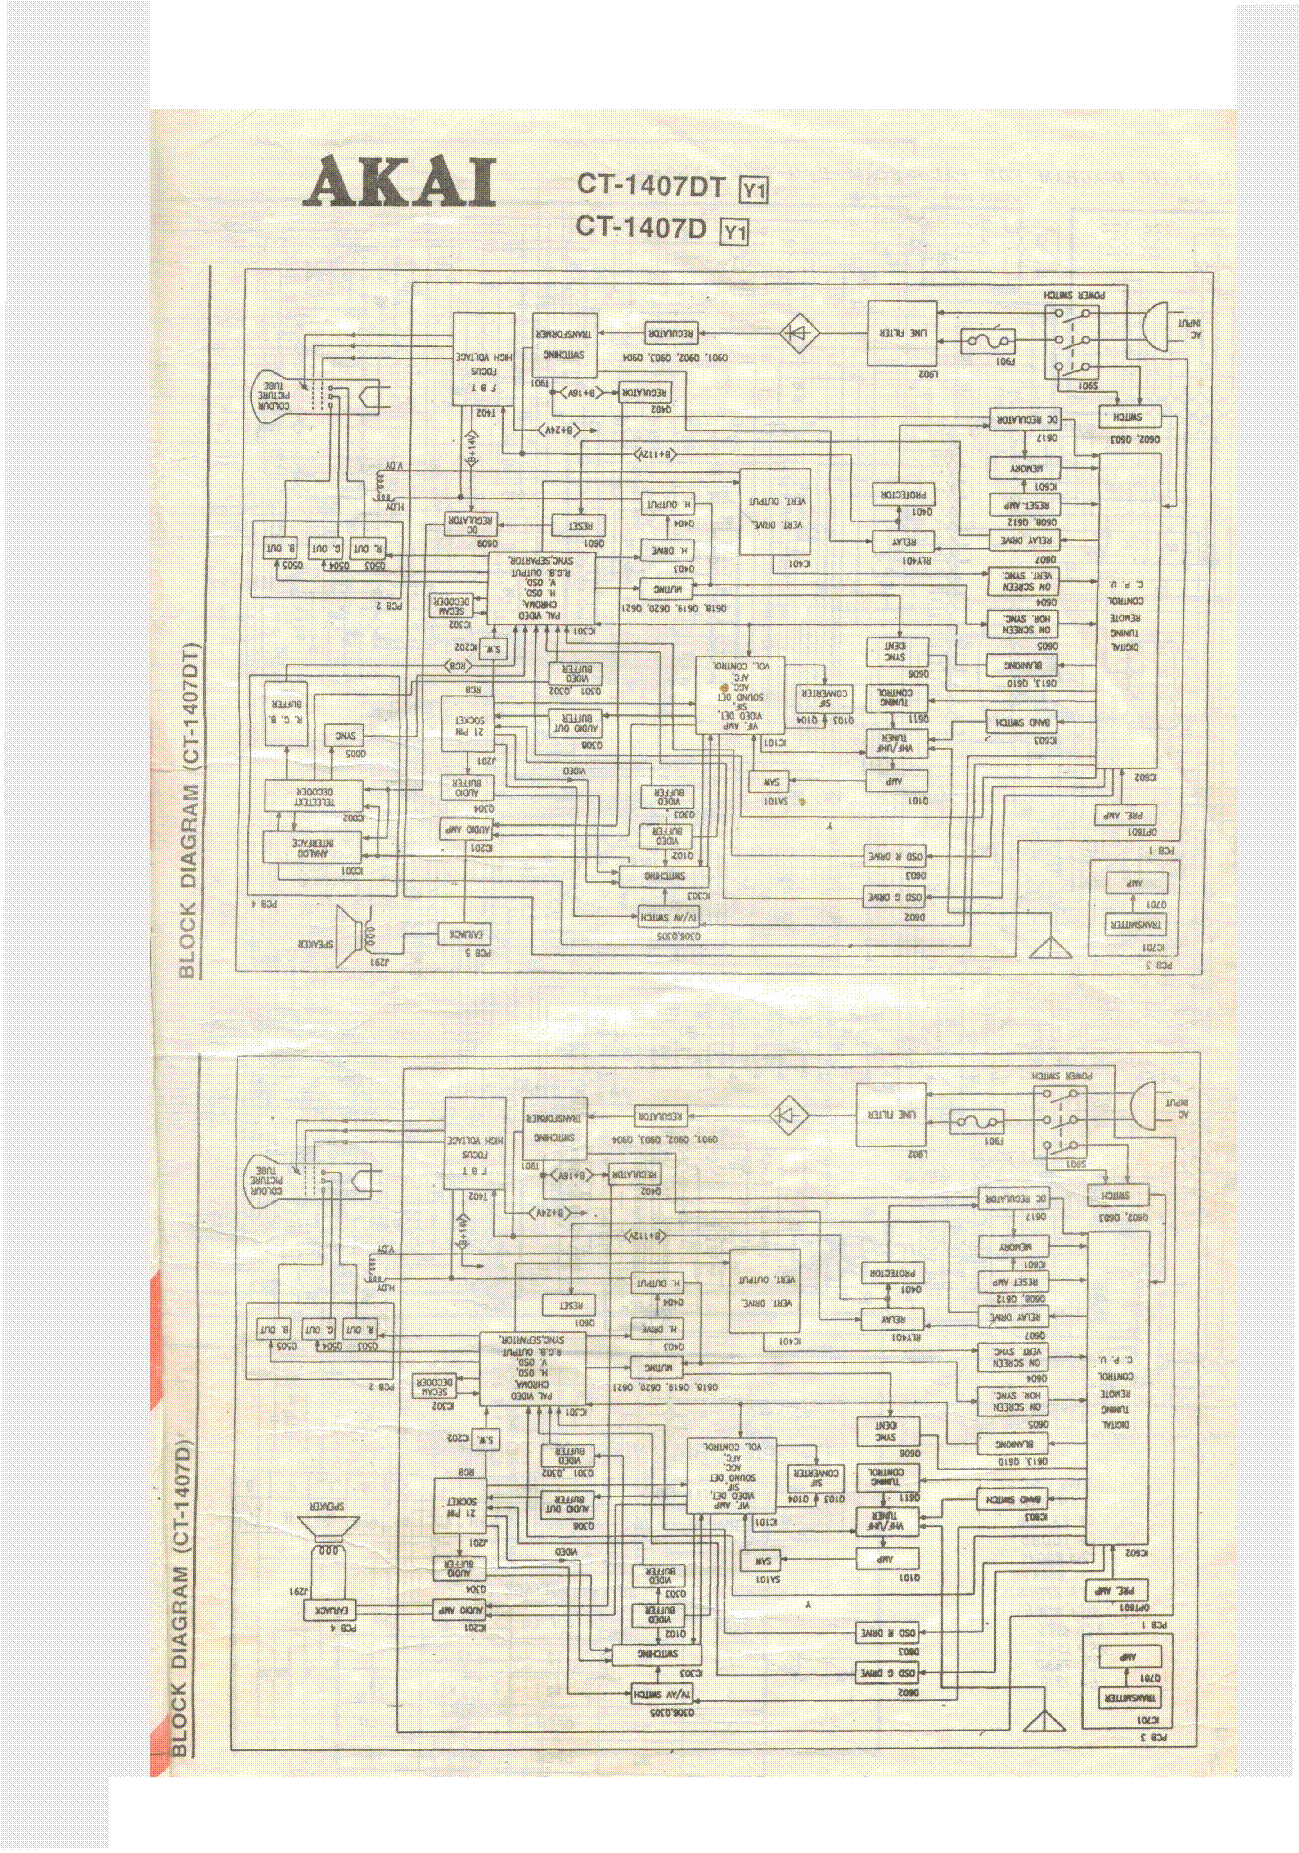 AKAI CT-1407DT Y1 SCH service manual (1st page)